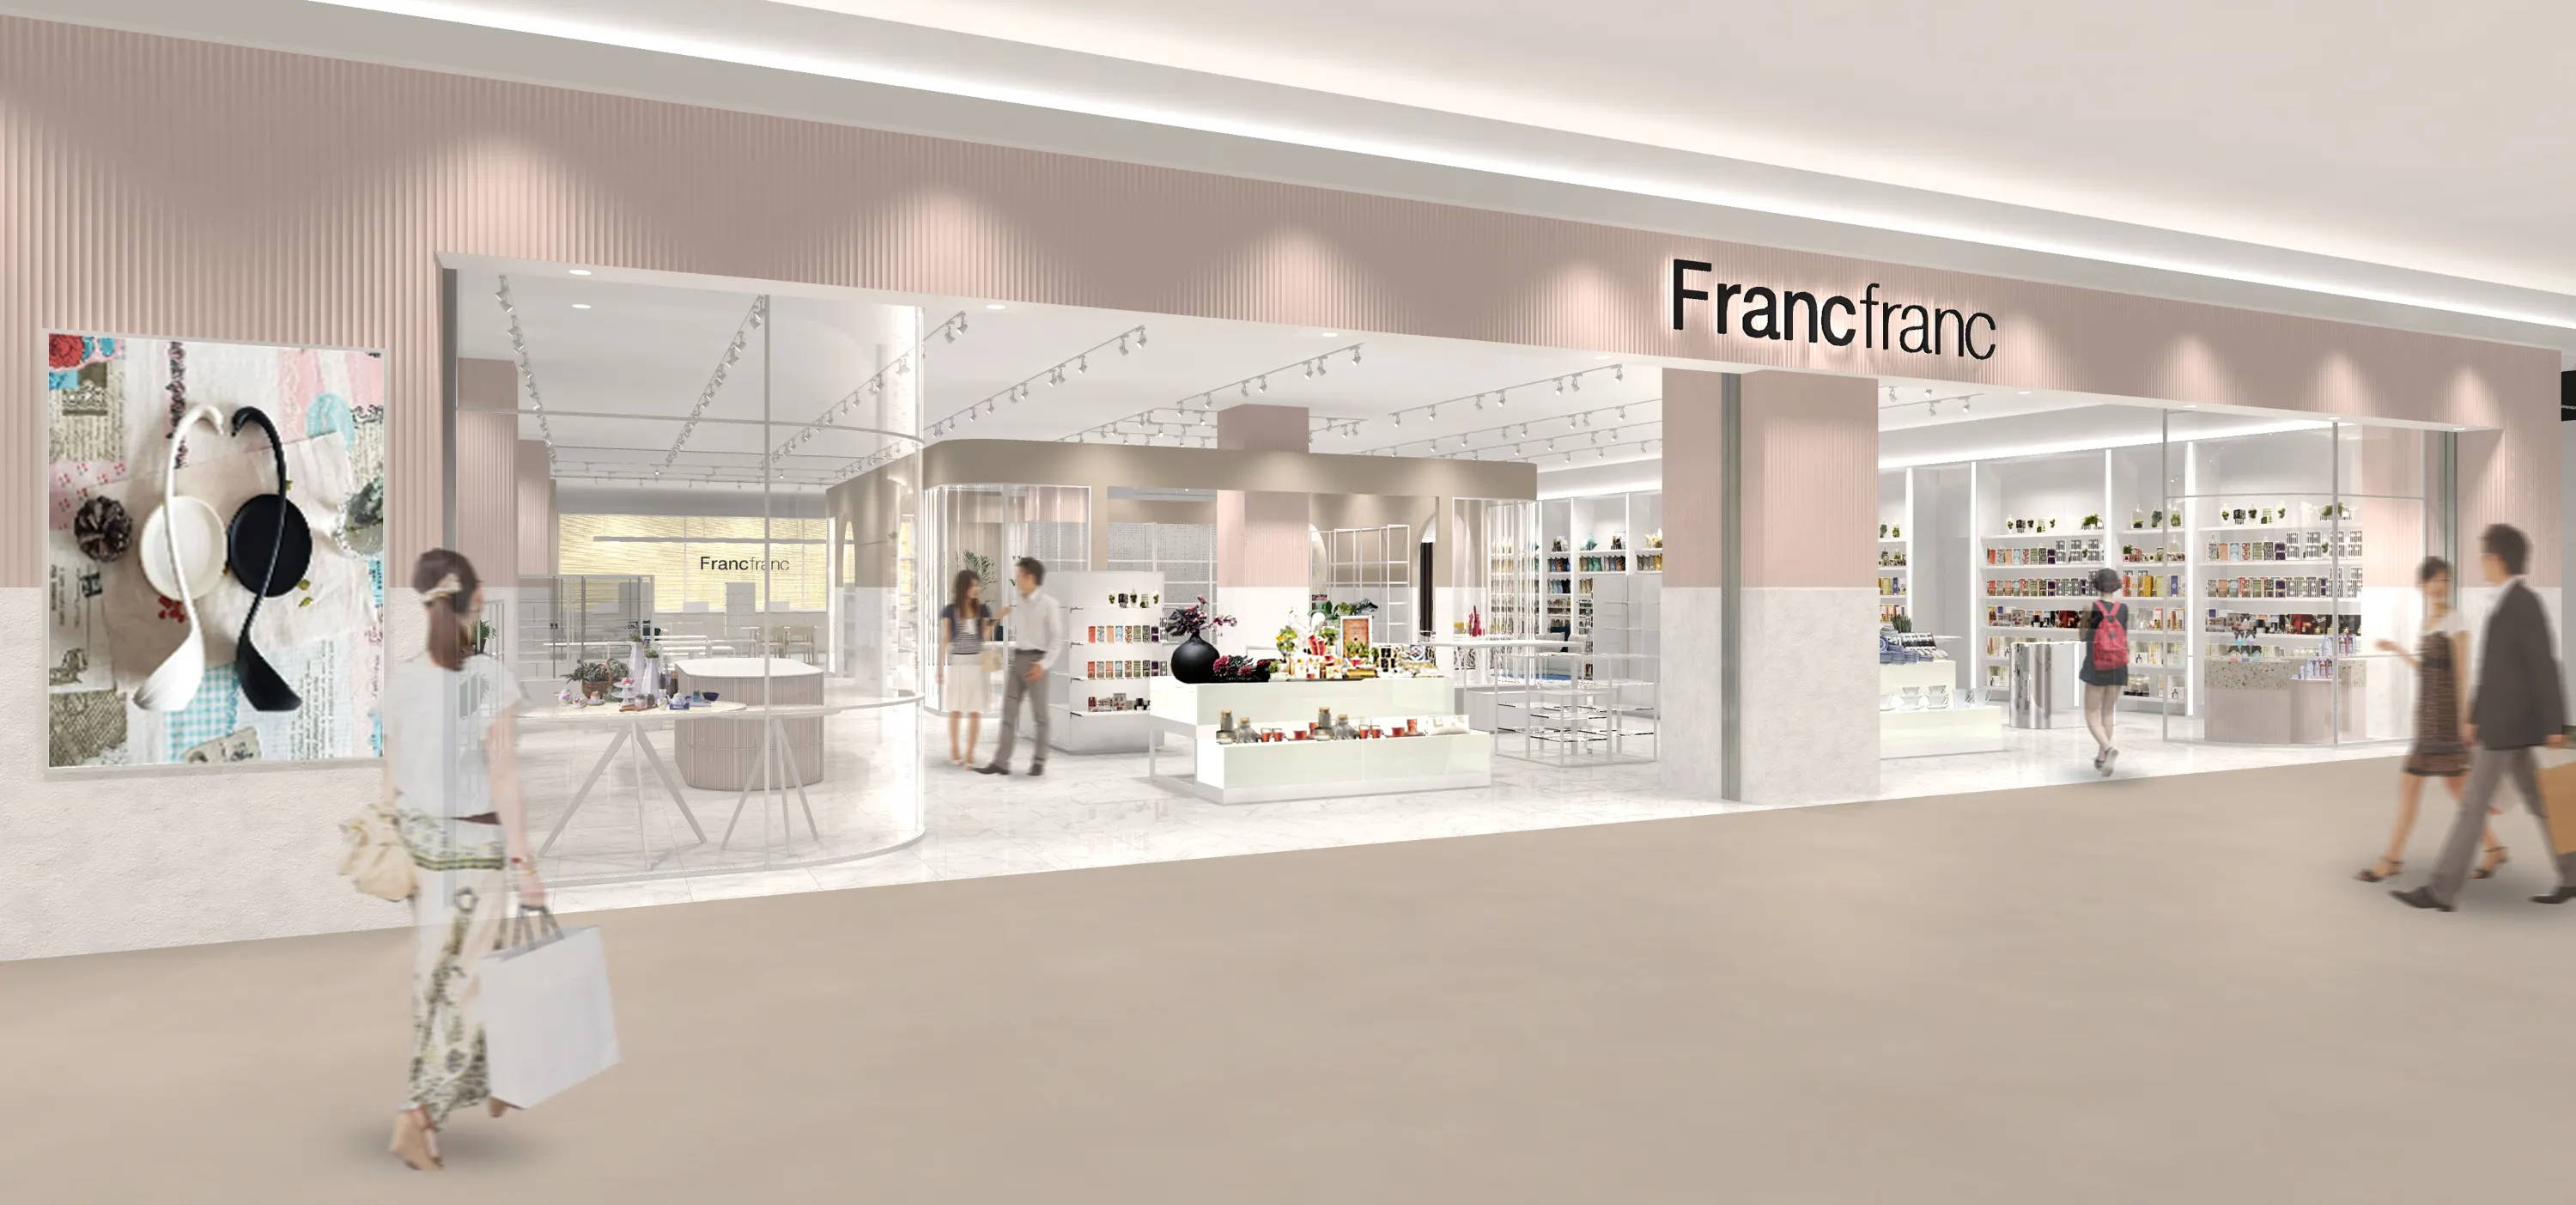 Francfranc 5 28 木 越谷レイクタウン店 ニューオープン Francfranc フランフラン 公式通販 家具 インテリア 生活雑貨